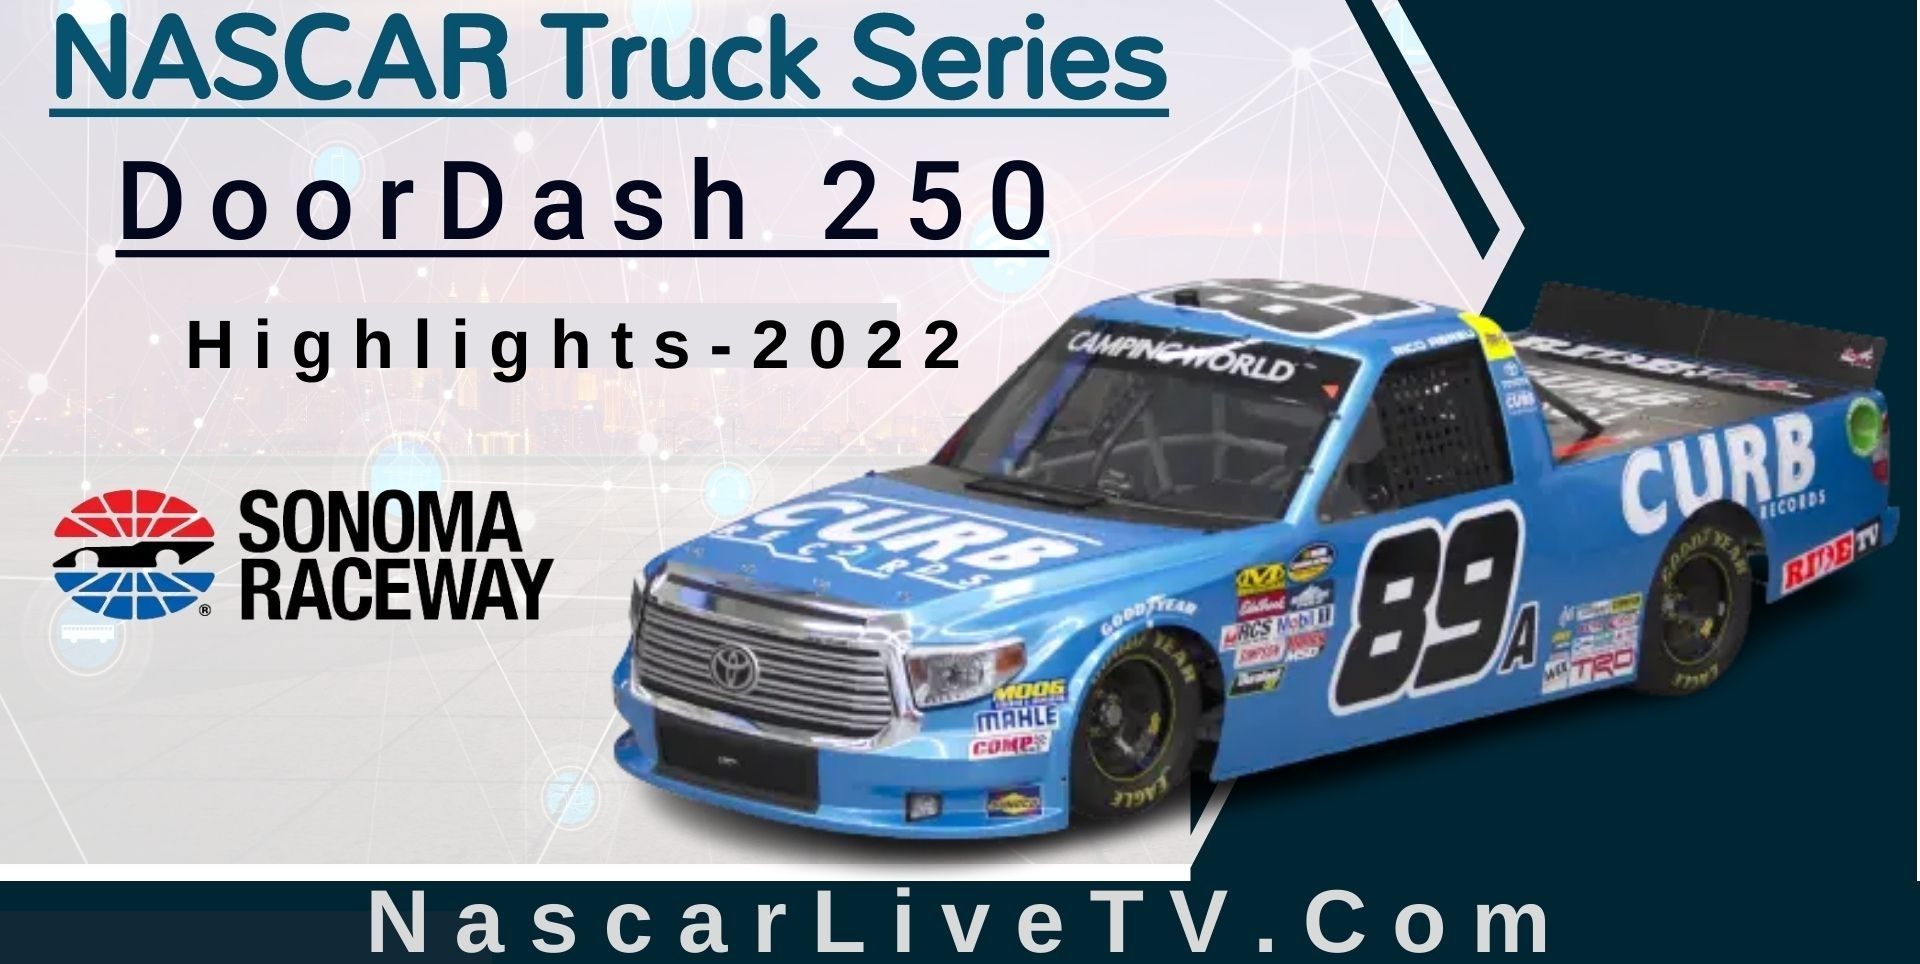 DoorDash 250 Highlights NASCAR Truck Series 2022